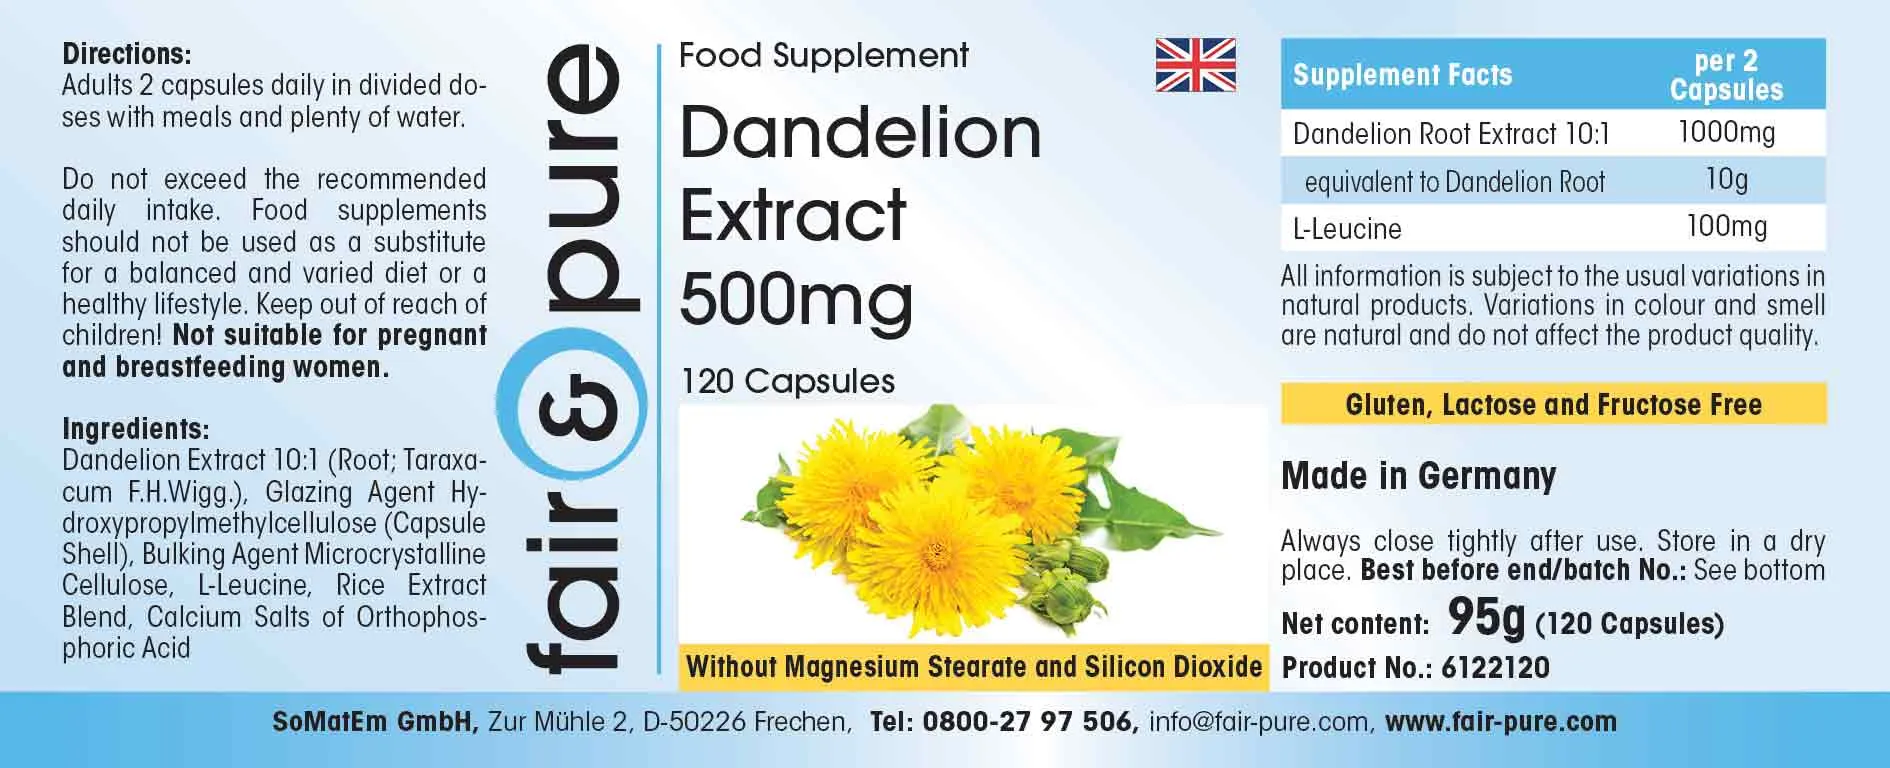 Dandelion Root Extract 500mg